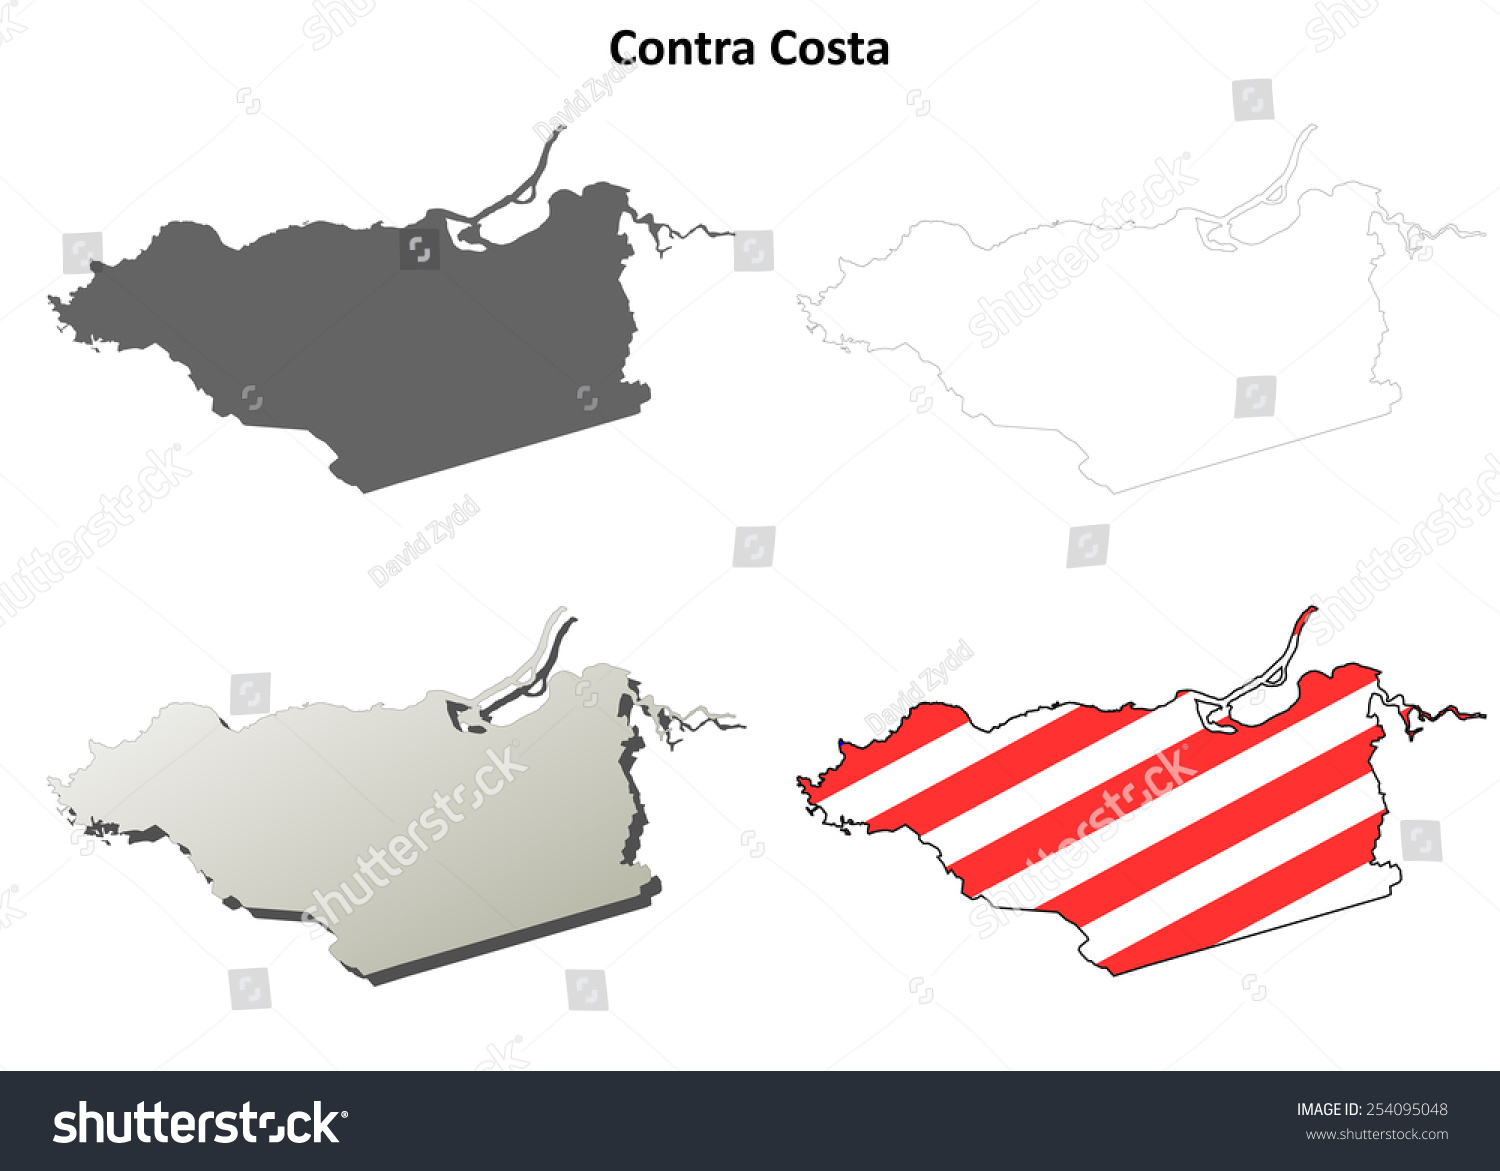 Contra Costa County (California) outline map set #254095048